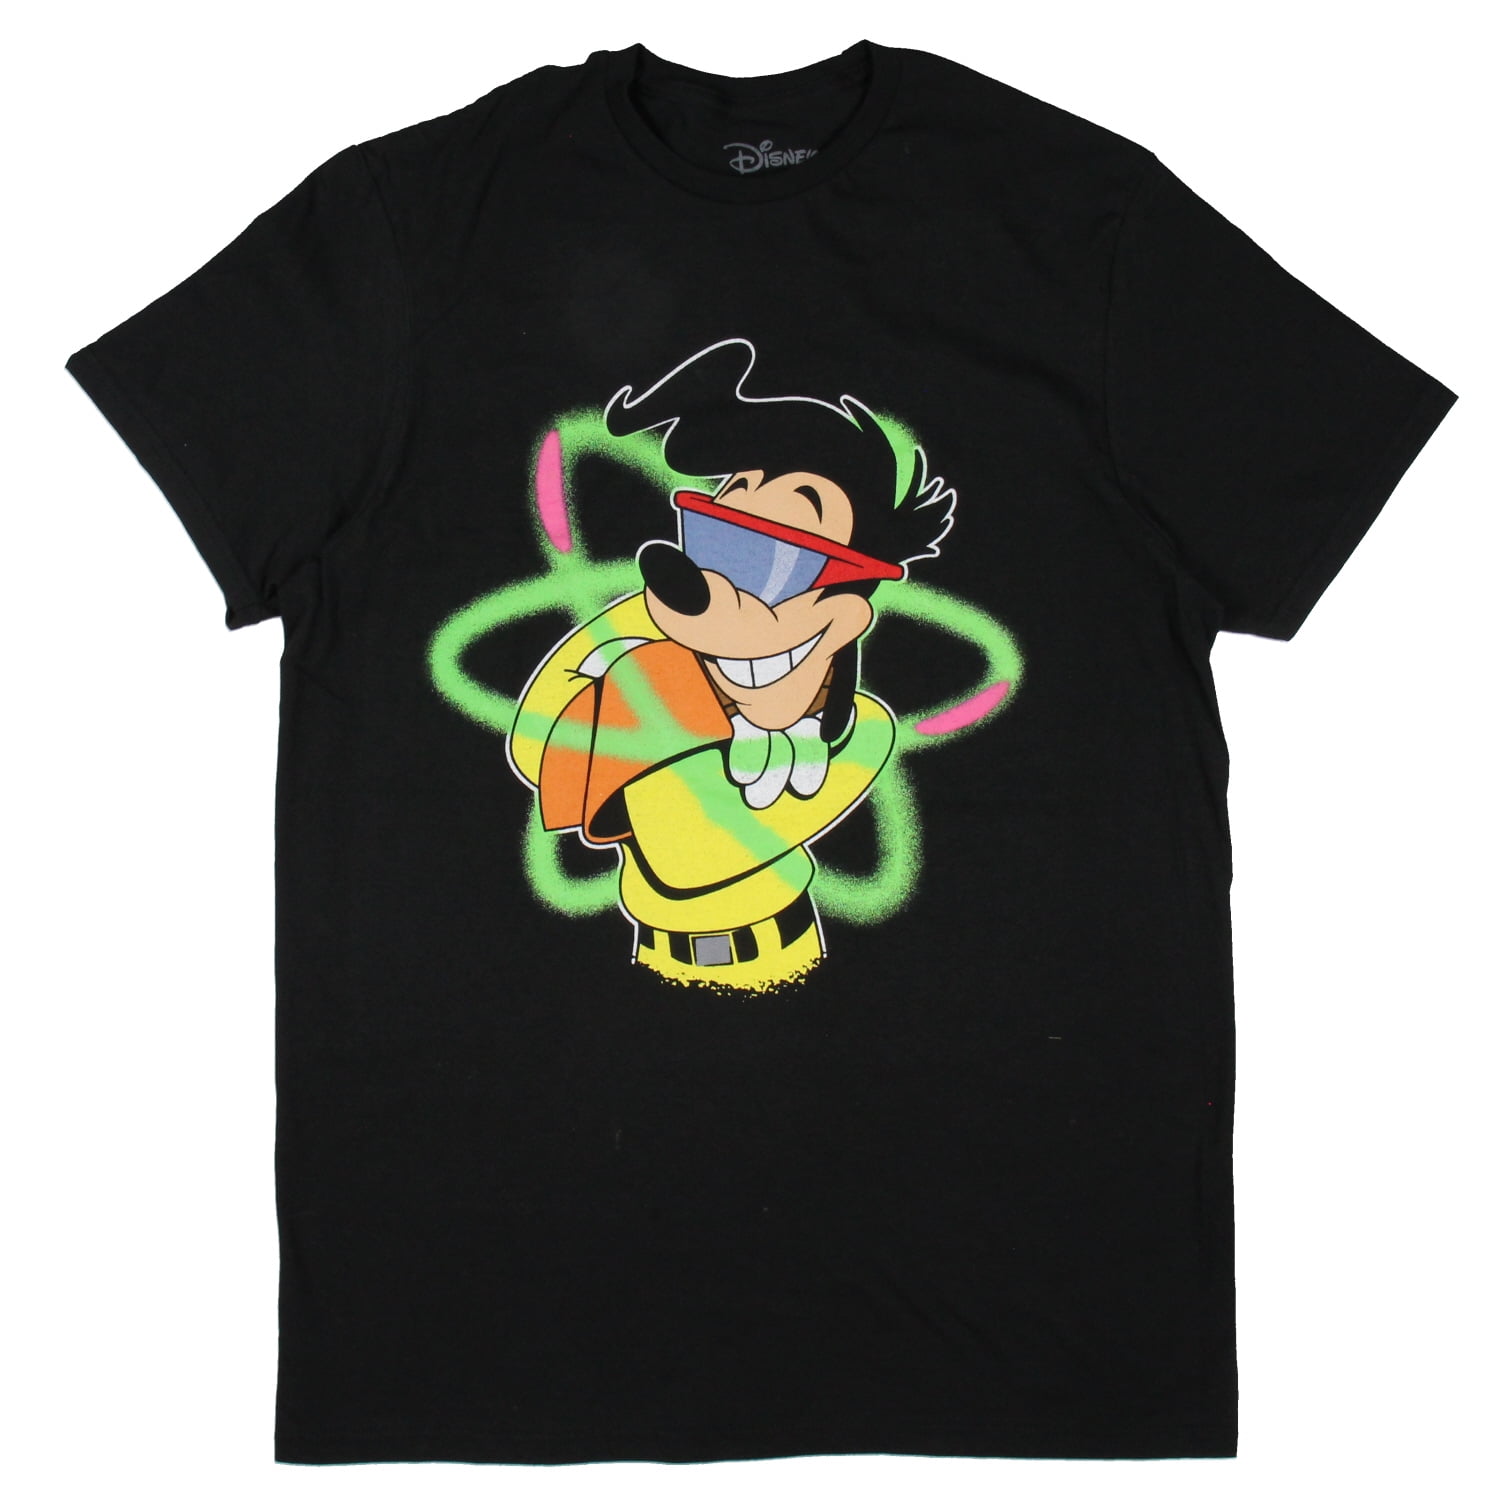 Disney Mens Powerline Goofy Shirt A Goofy Movie Powerline Max Graphic T- Shirt MD 